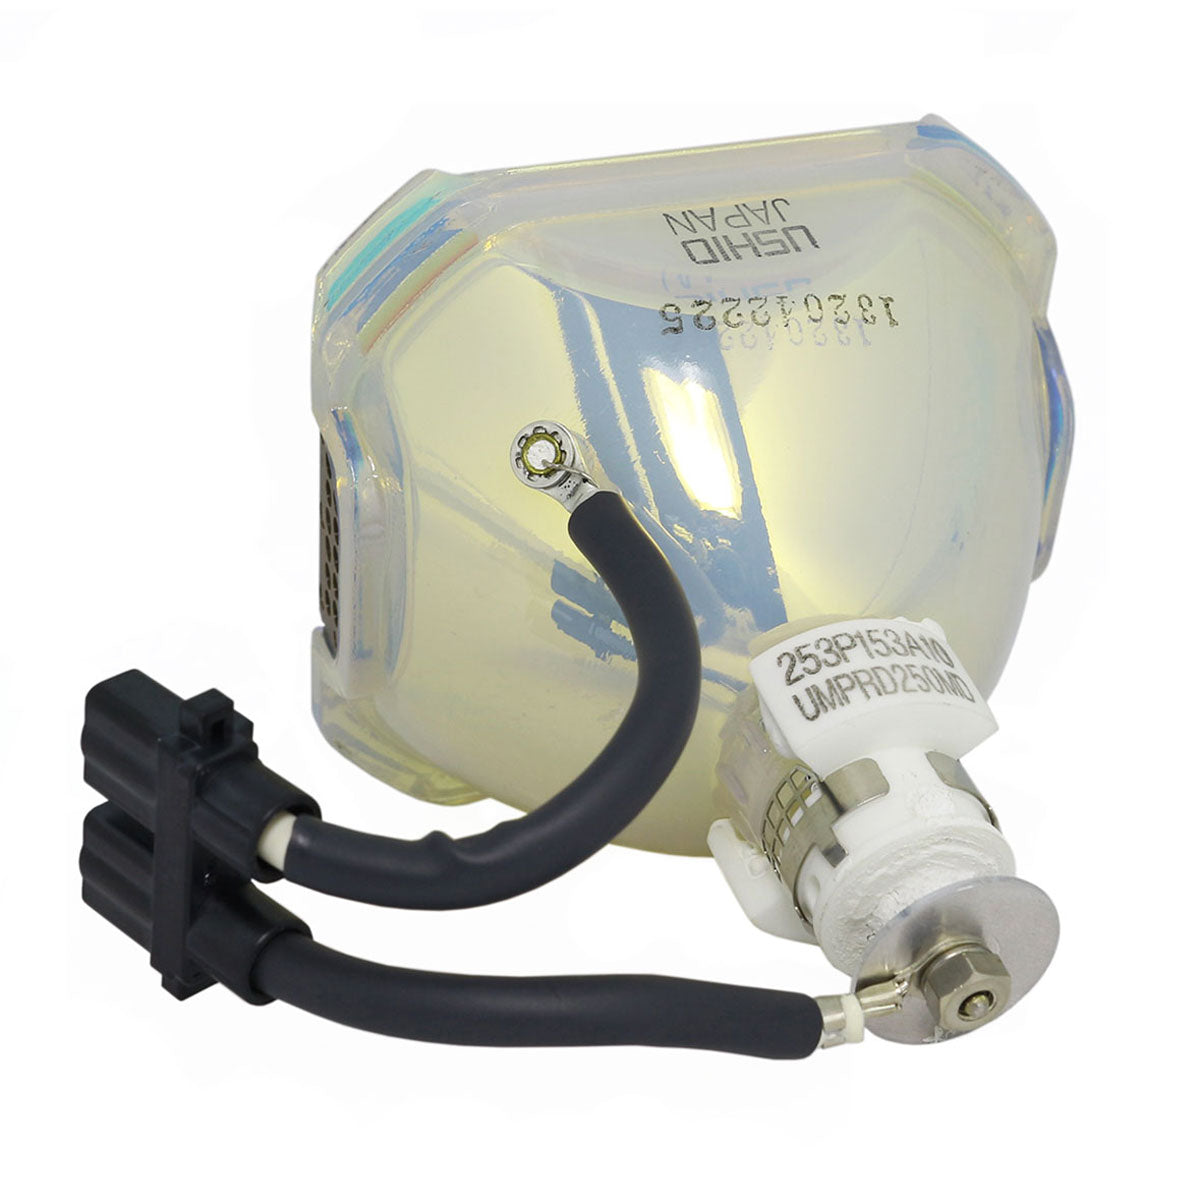 Dukane 456-9060 Ushio Projector Bare Lamp